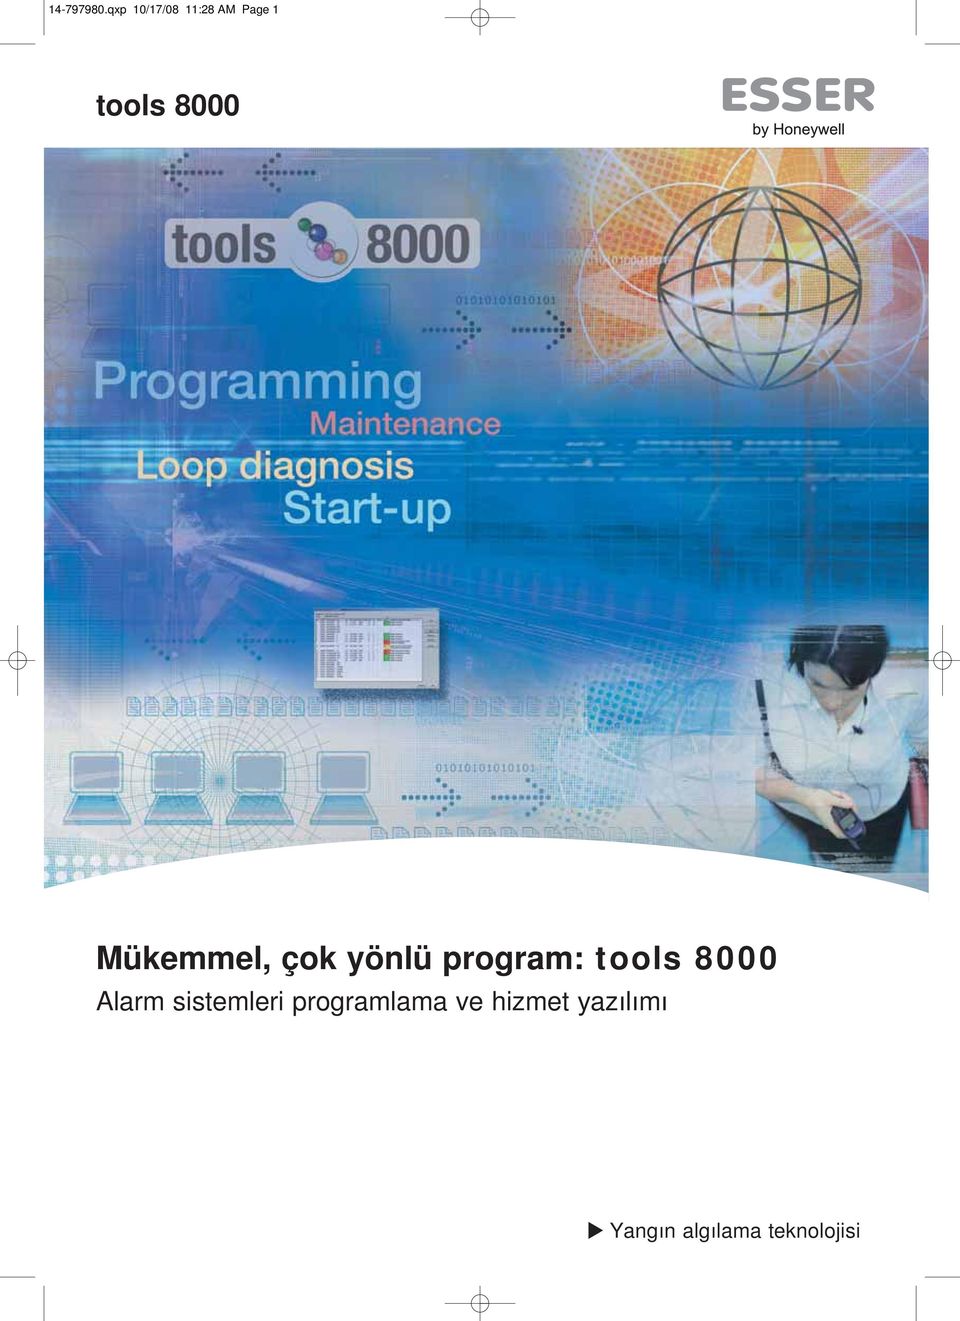 Mükemmel, çok yönlü program: tools 8000